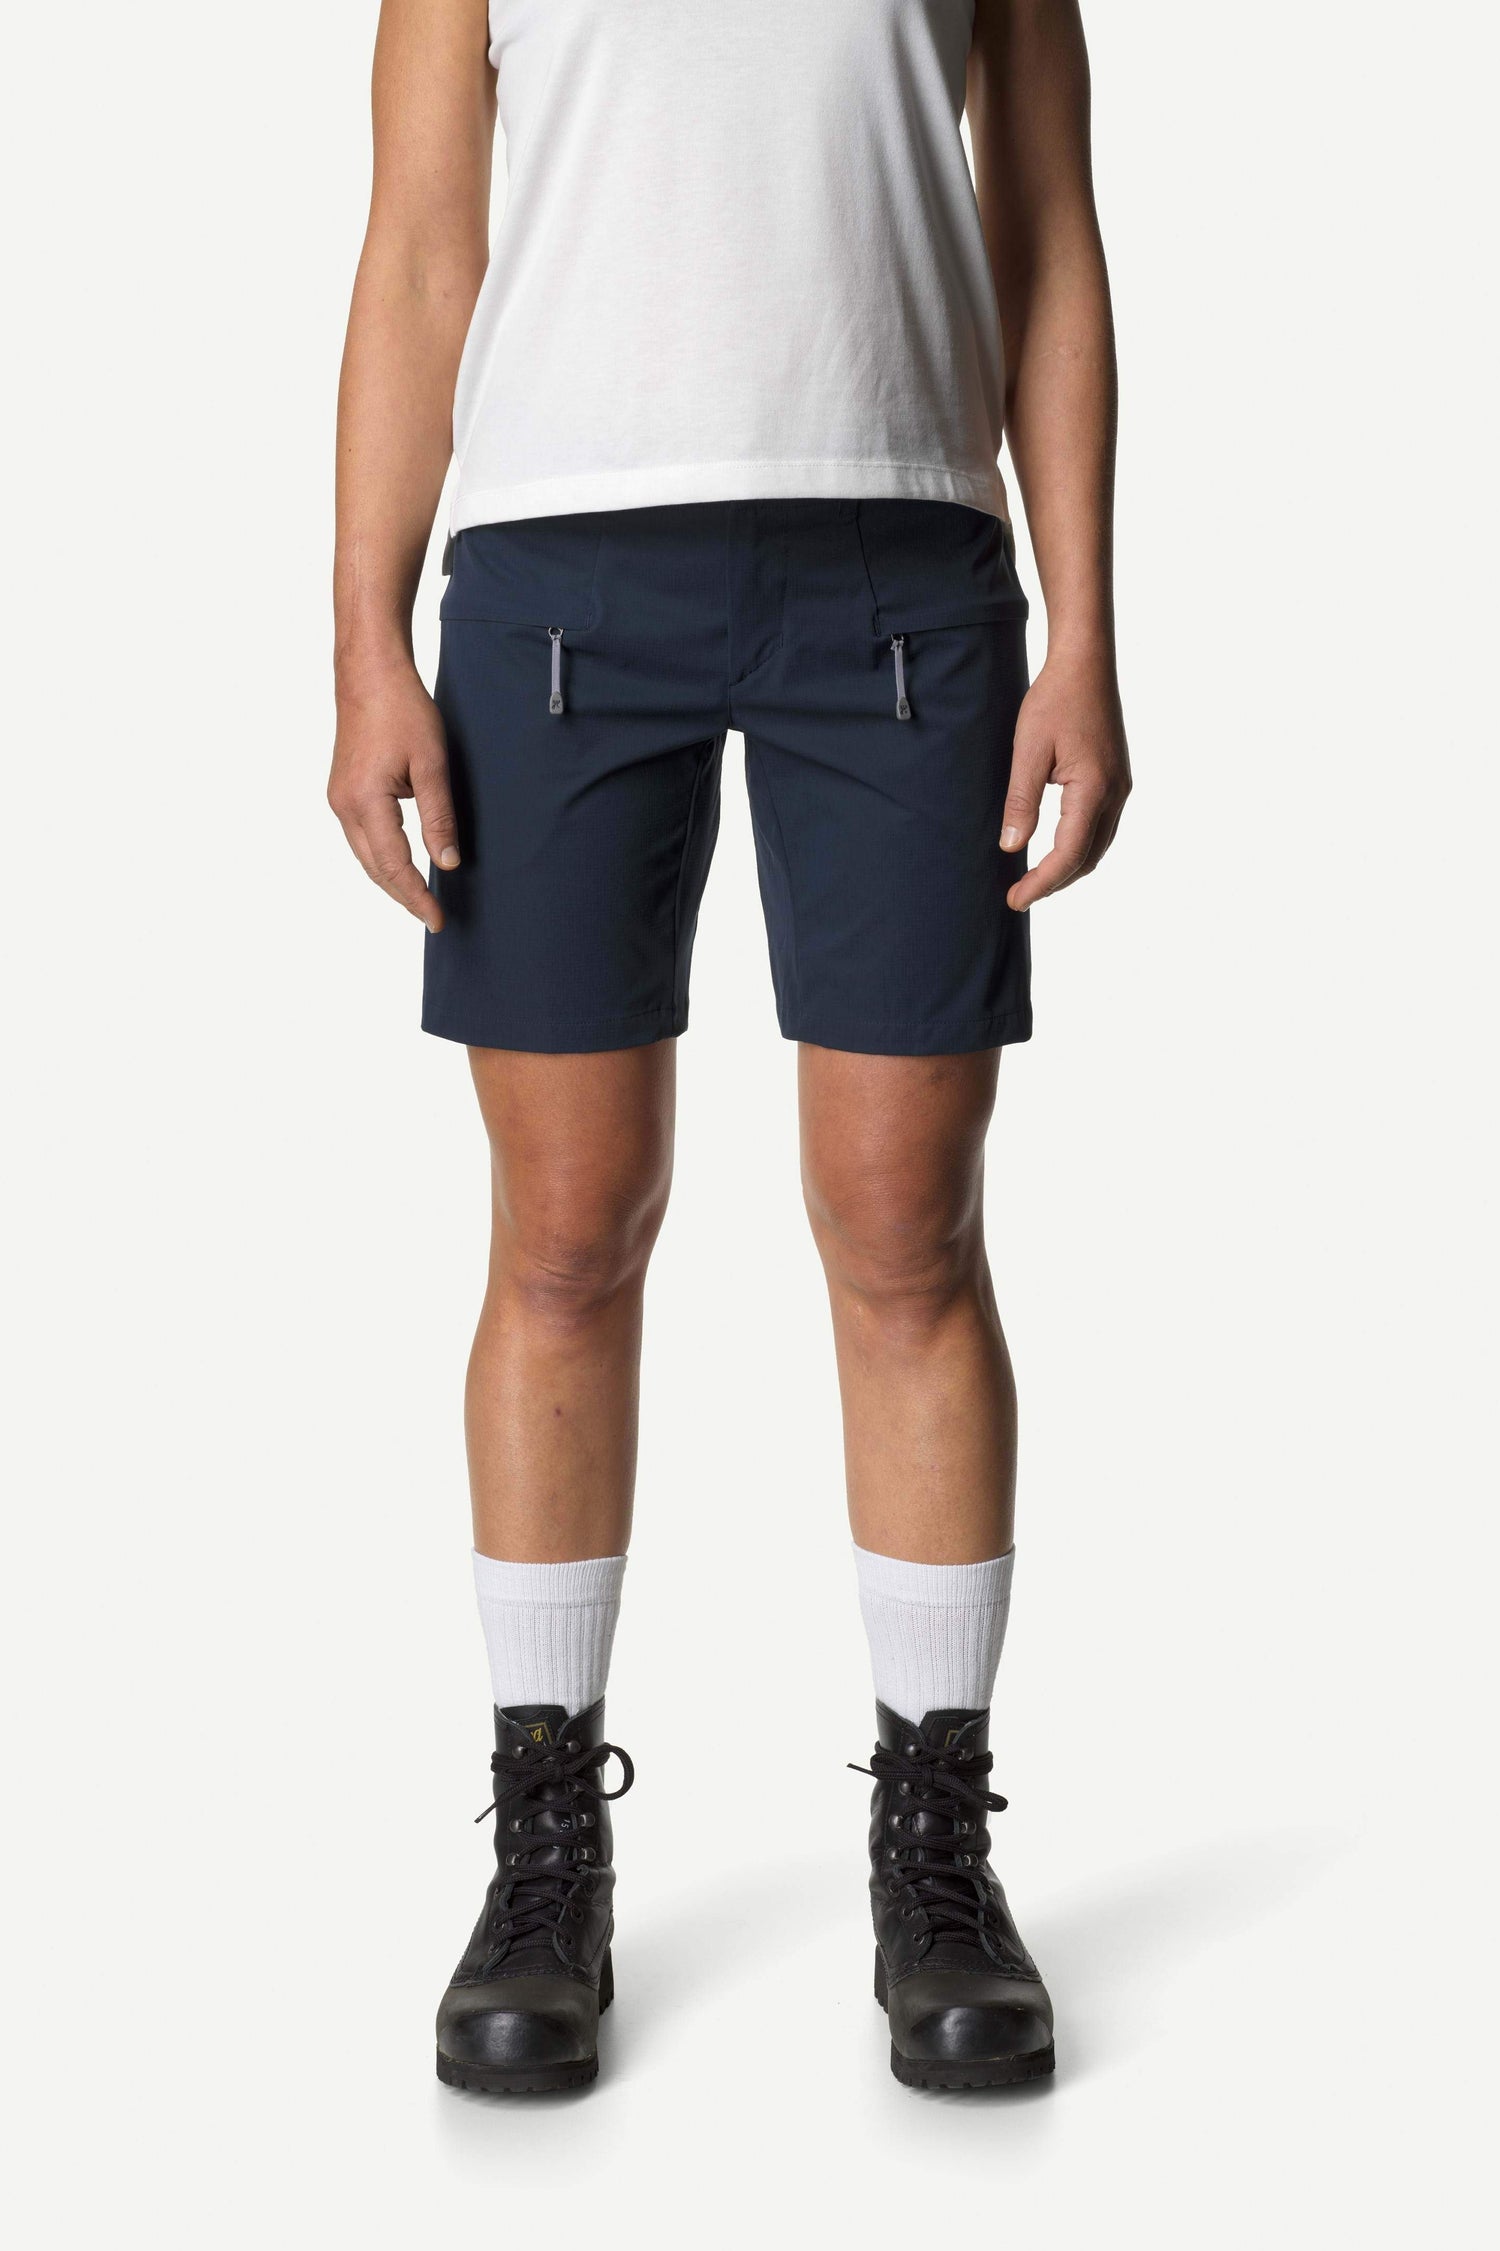 Houdini Women's Motion Top Pants - Recycled Polyester – Weekendbee -  premium sportswear